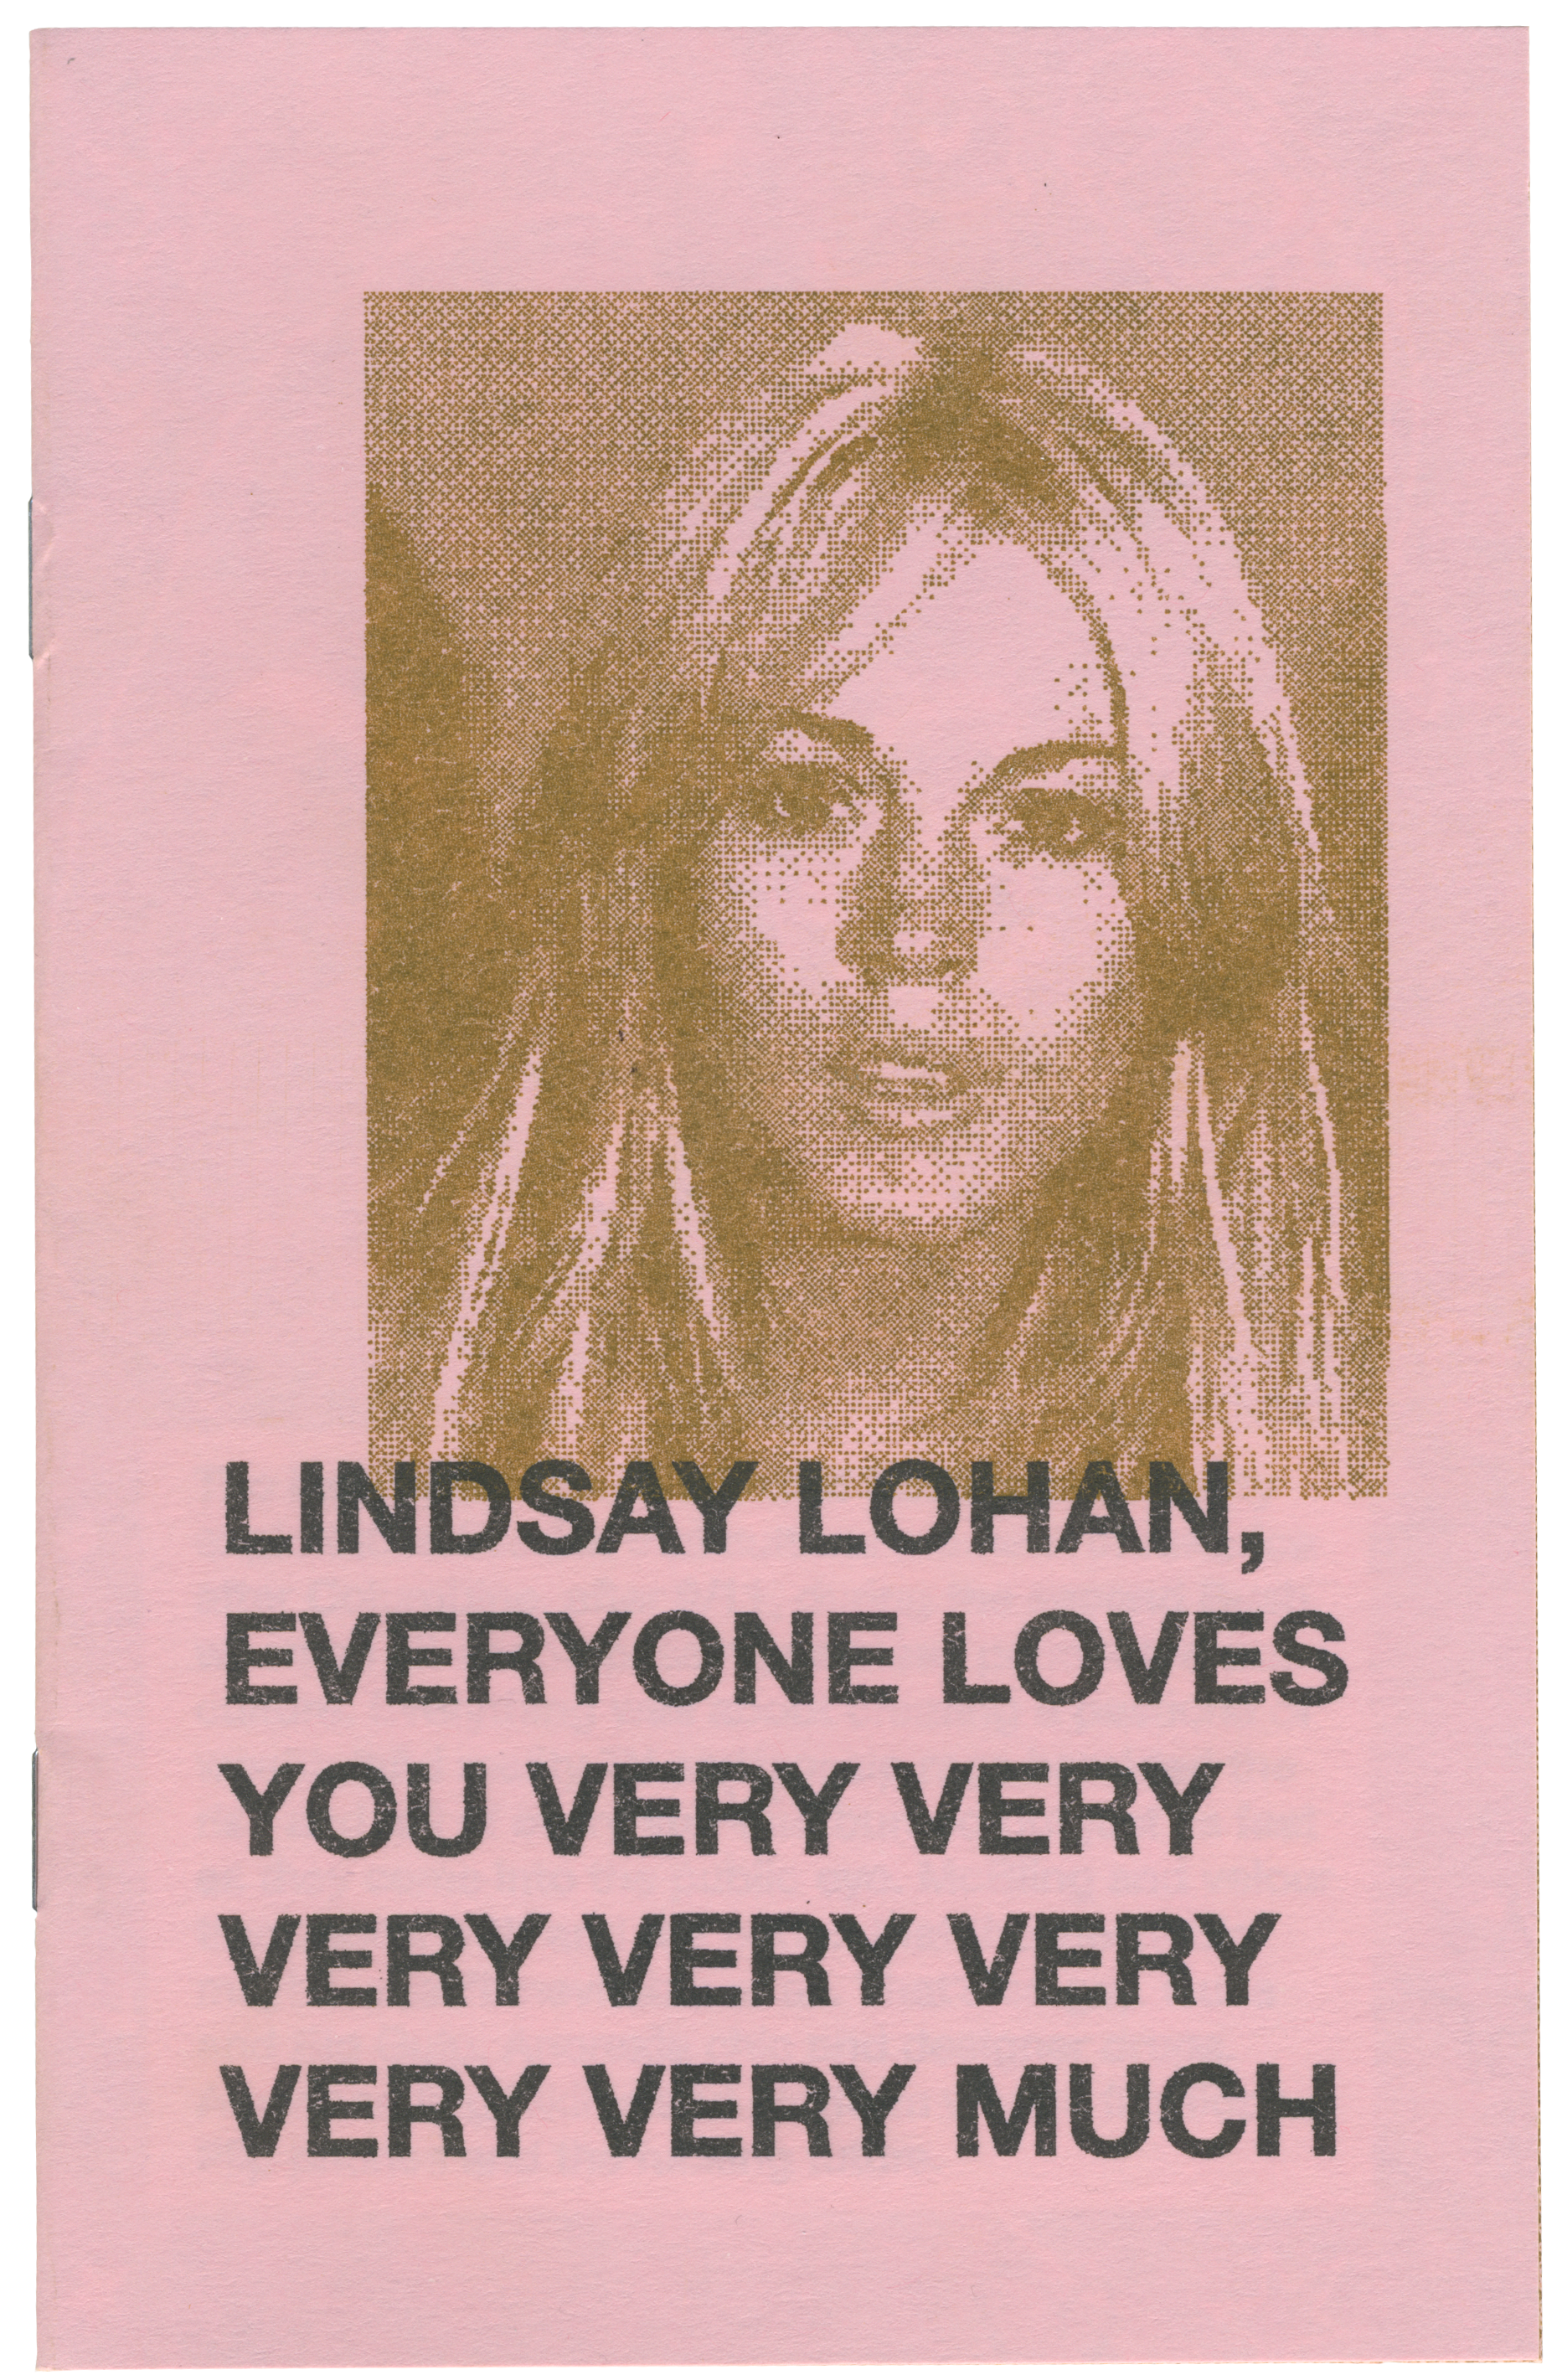 LINDSAY LOHAN, EVERYONE LOVES YOU VERY VERY VERY VERY VERY VERY VERY MUCH